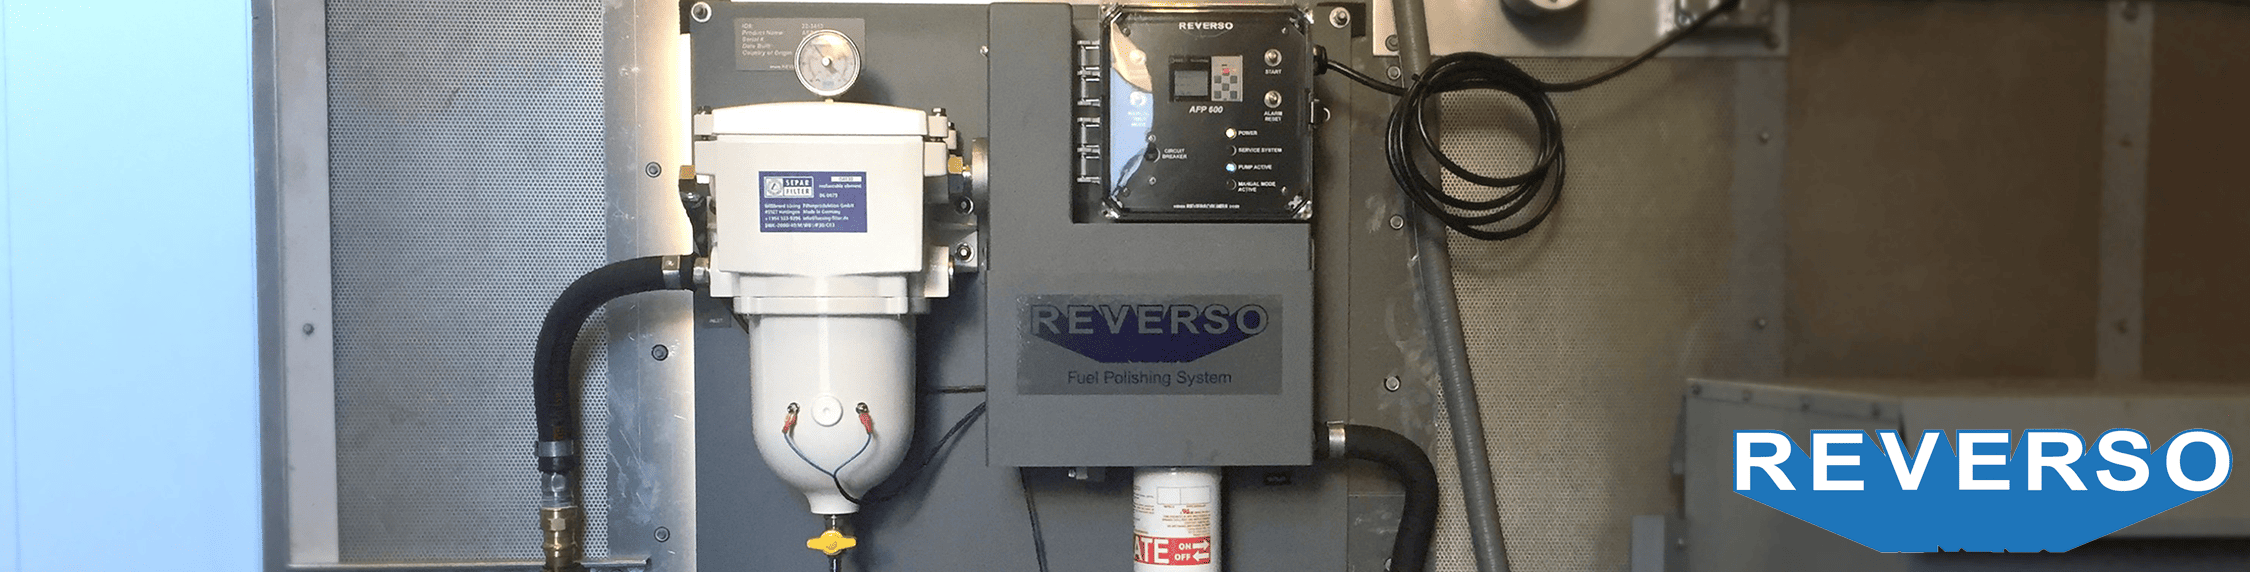 Marine Diesel Fuel Polishing Systems | REVERSO